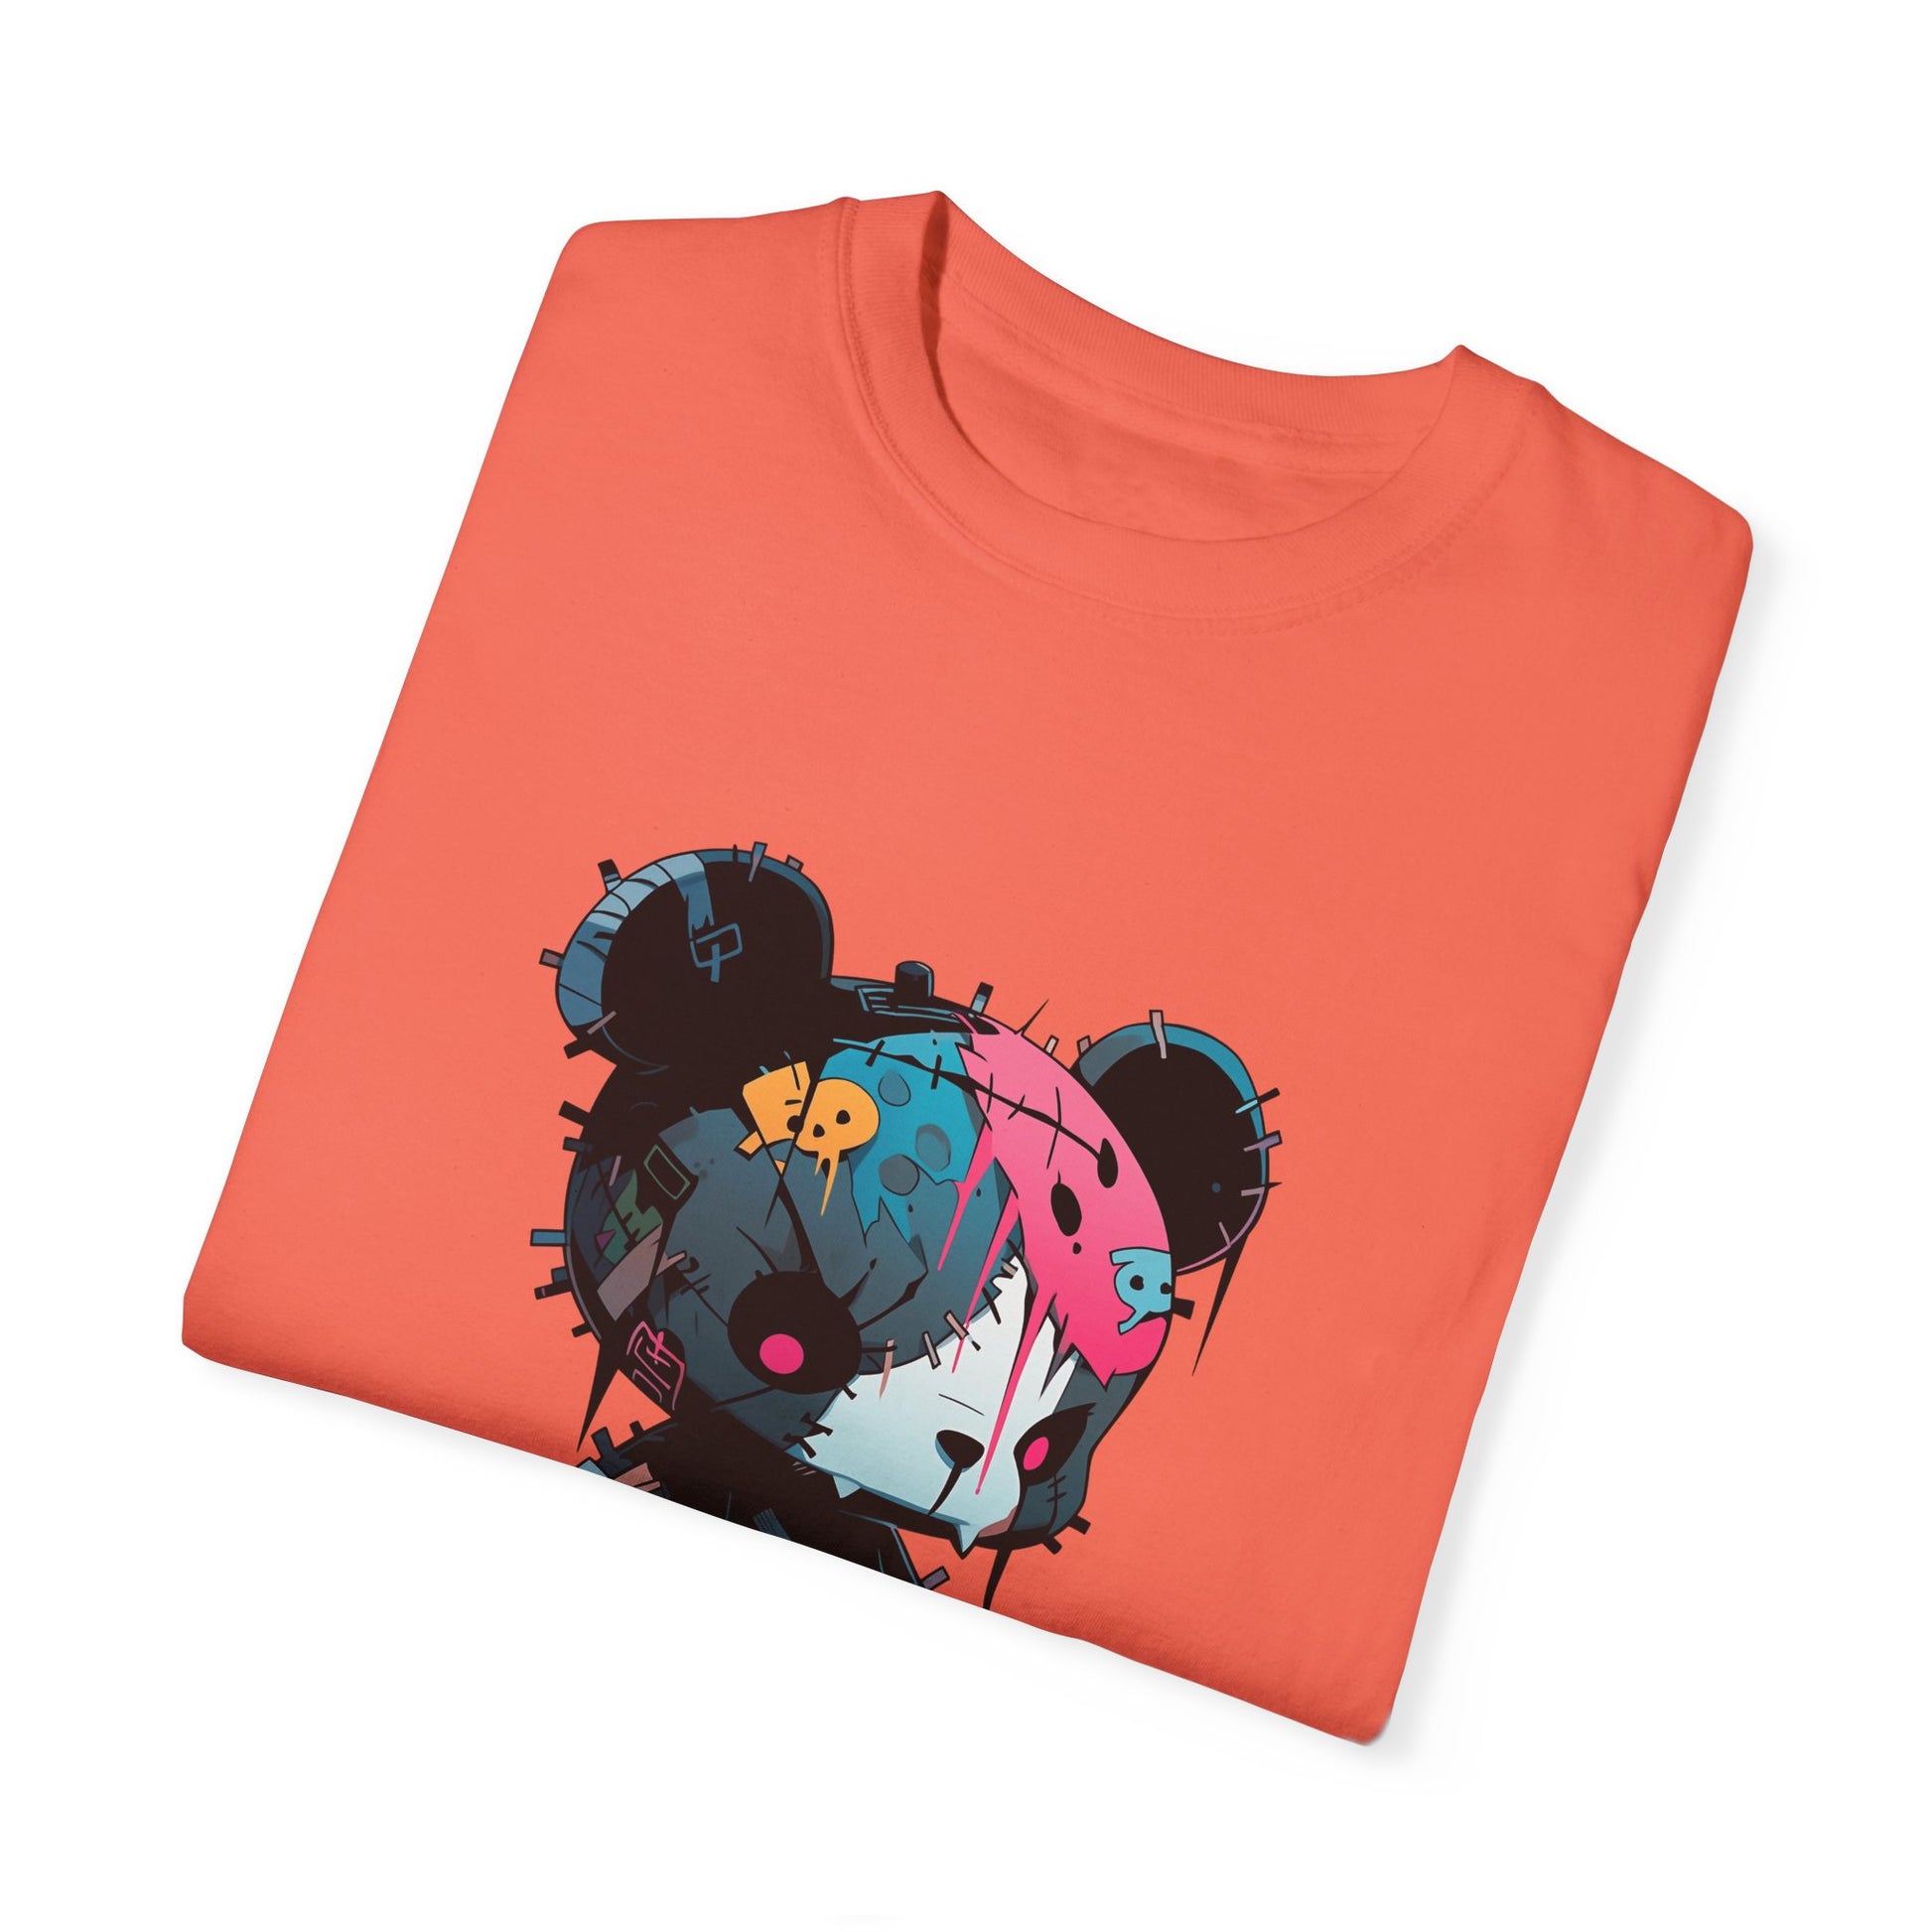 Hip Hop Teddy Bear Graphic Unisex Garment-dyed T-shirt Cotton Funny Humorous Graphic Soft Premium Unisex Men Women Bright Salmon T-shirt Birthday Gift-32